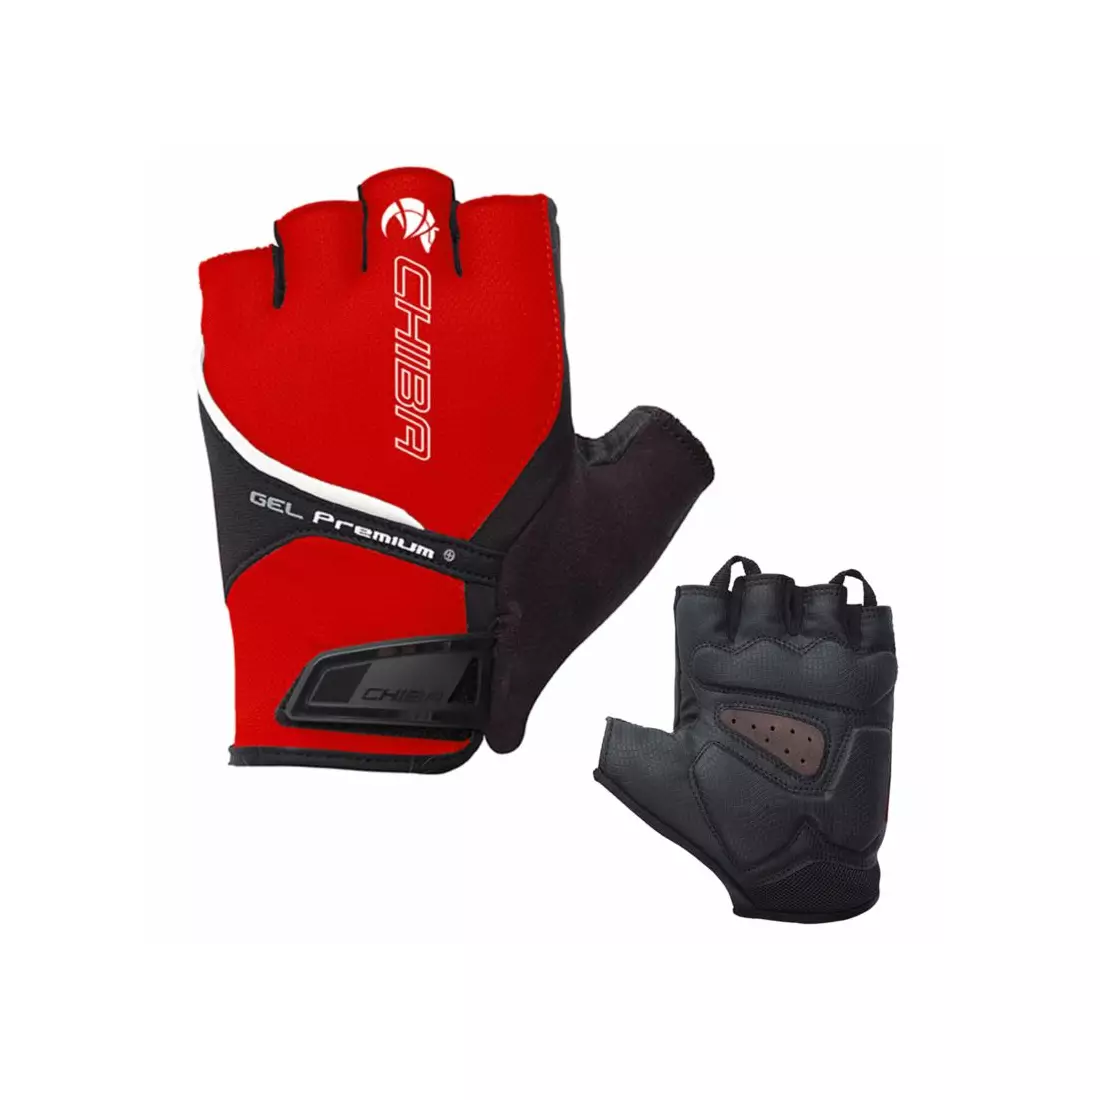 CHIBA Gel Premium cycling gloves, red